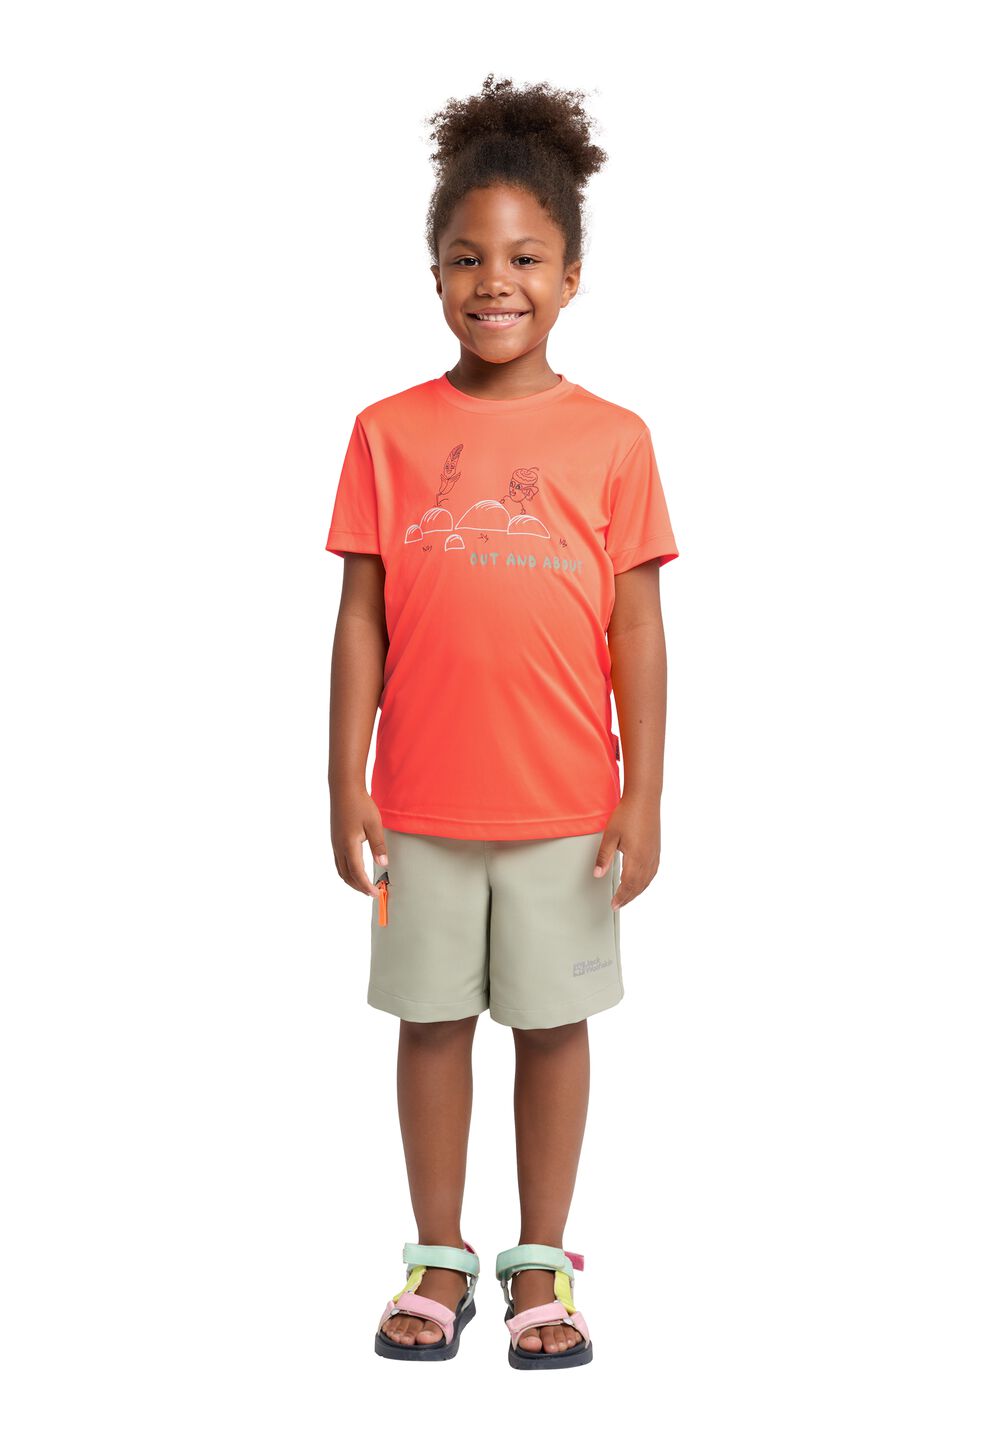 Jack Wolfskin OUT AND About T-Shirt Kids Functioneel shirt Kinderen 152 rood digital orange